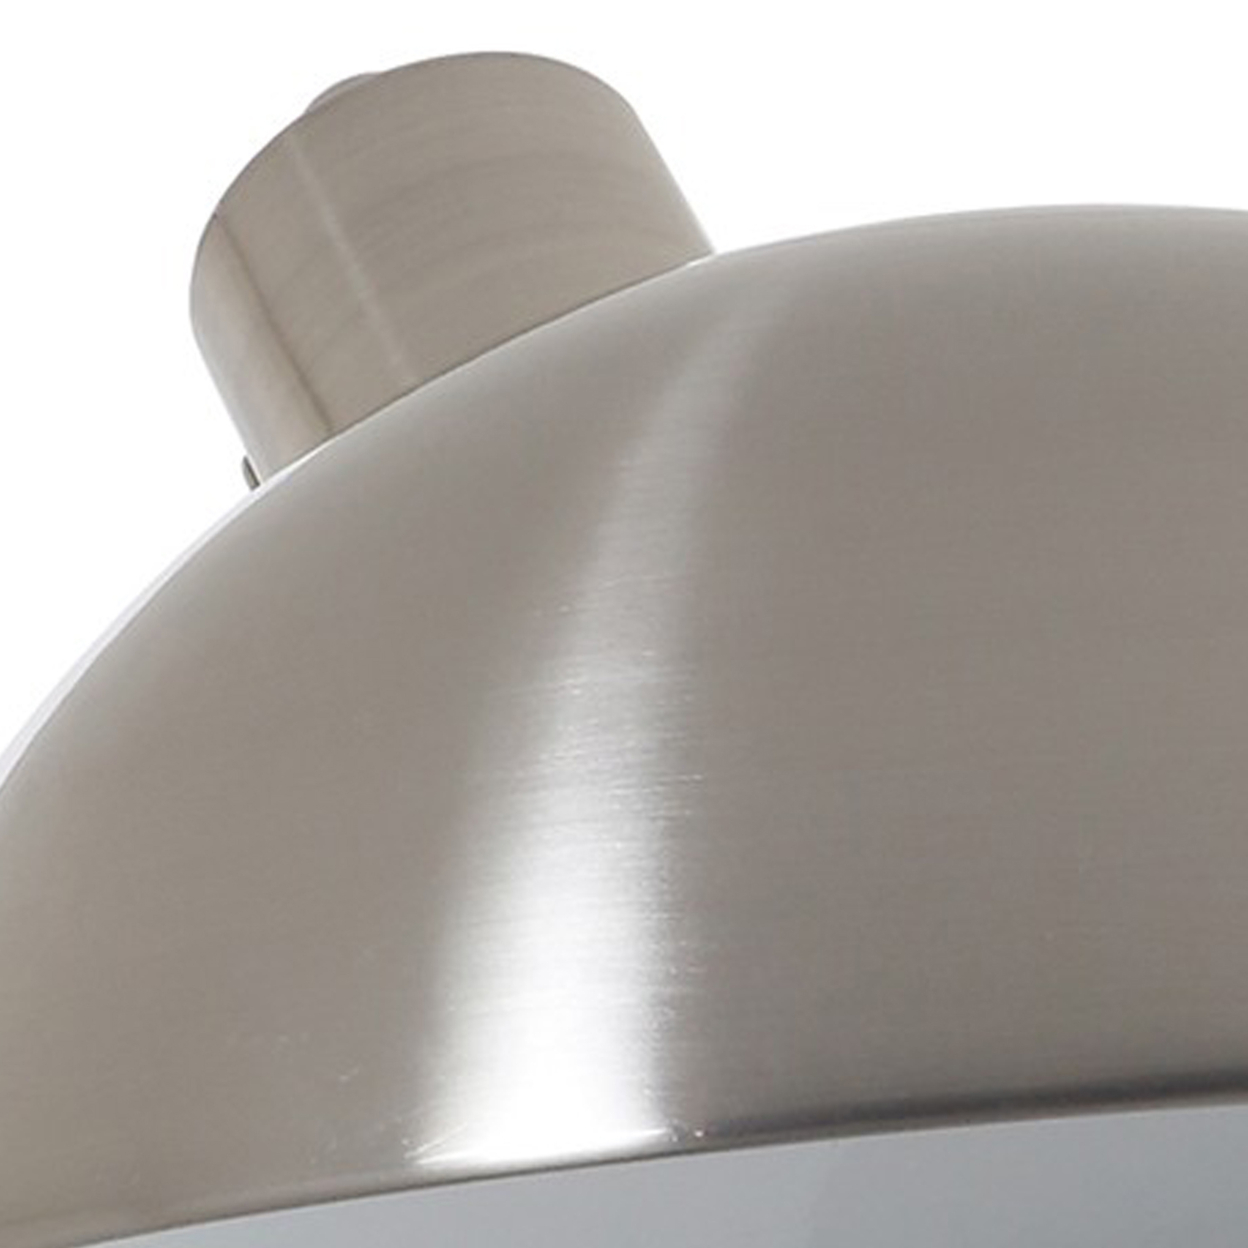 Desk Lamp With Adjustable Head And USB Port, Brushed Nickel- Saltoro Sherpi